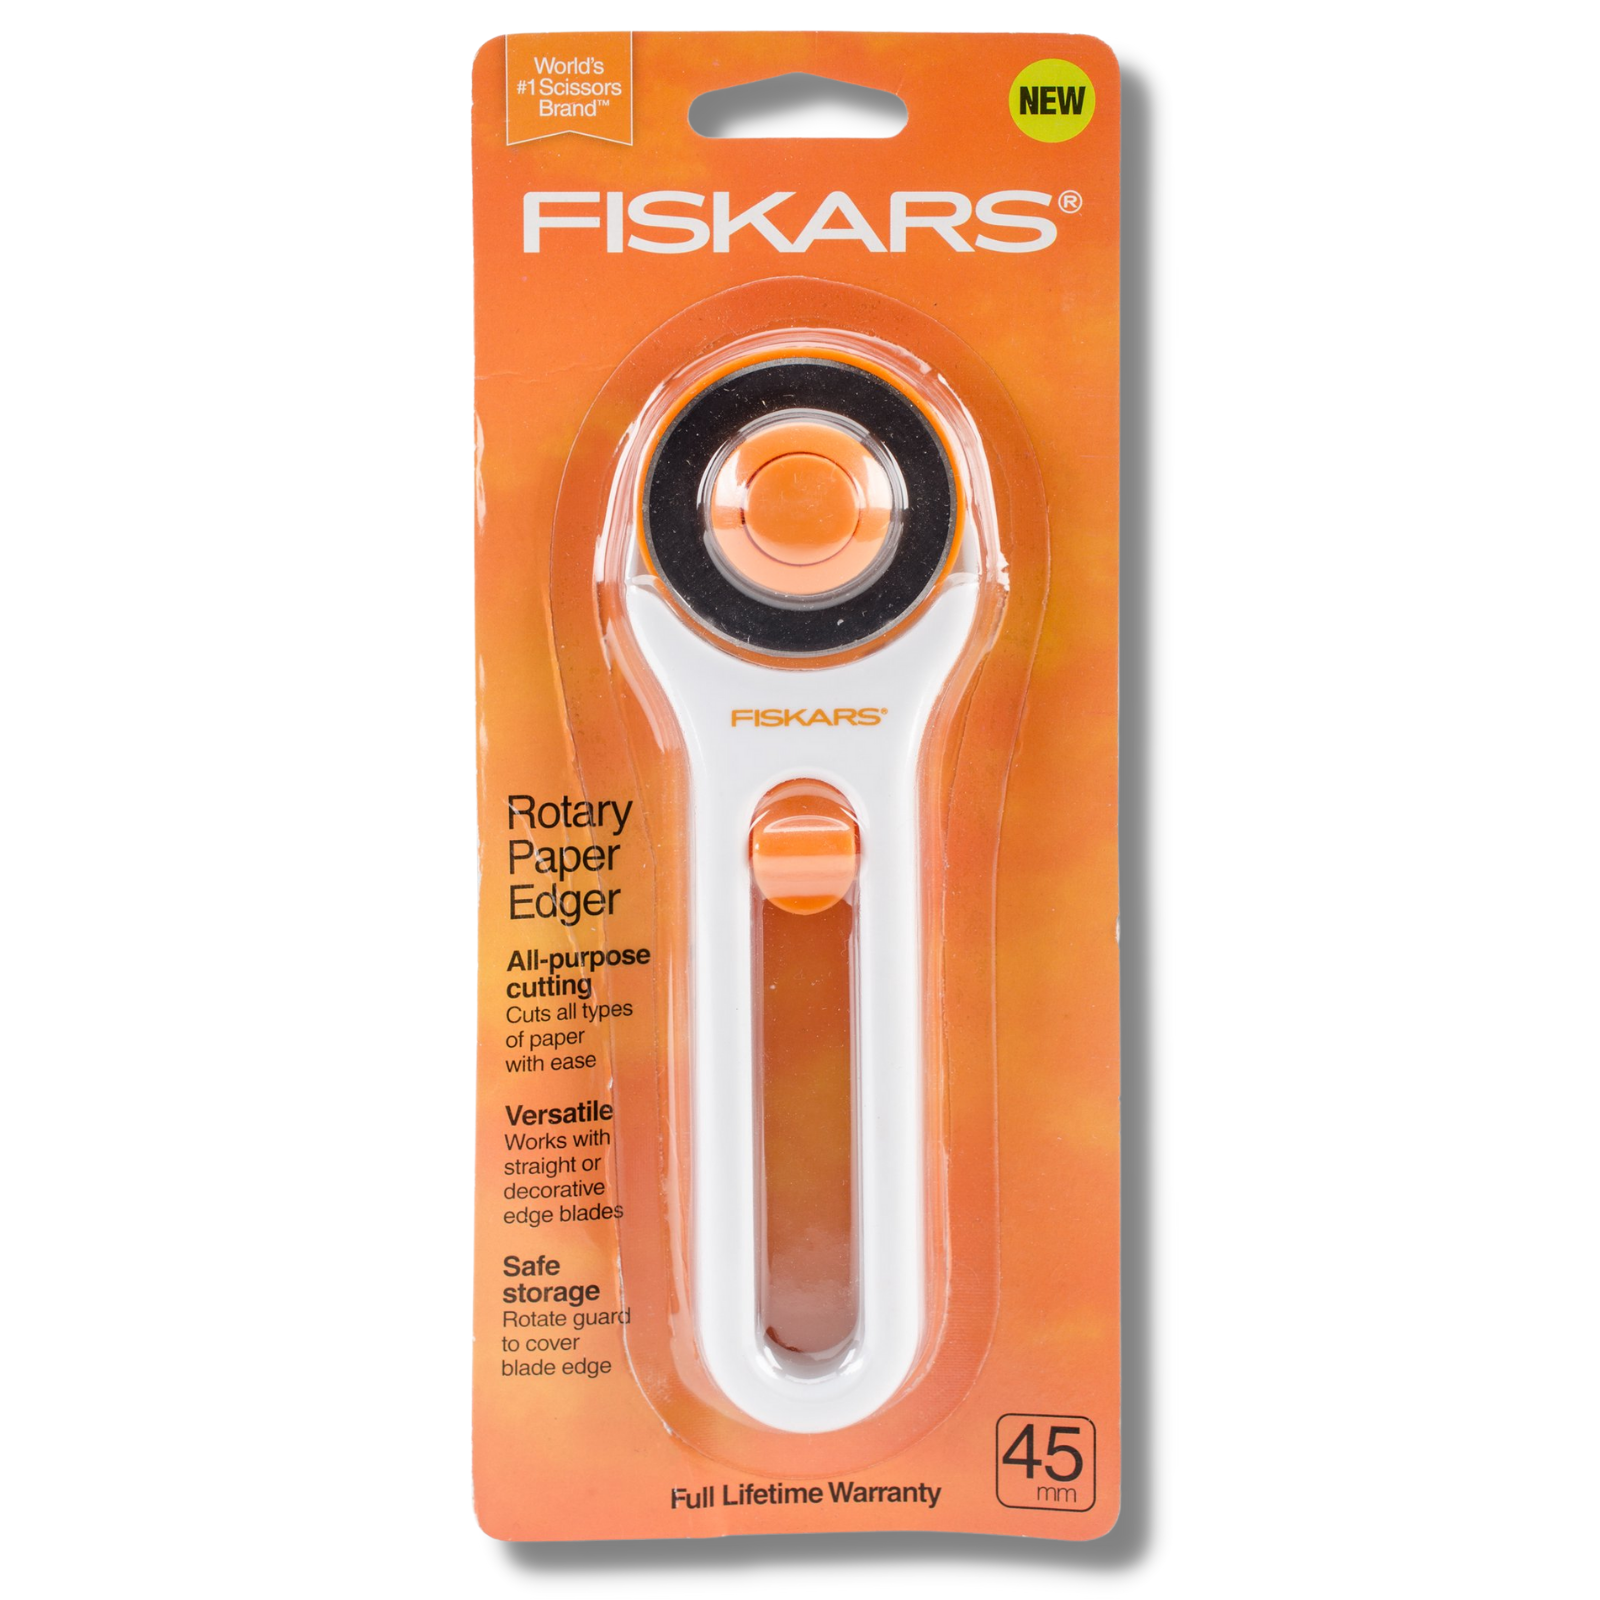 Fiskars Rotary Paper Edger, 45mm Blade, Heavy-Duty, Premium Steel - Ergonomic handle for reducing fatigue